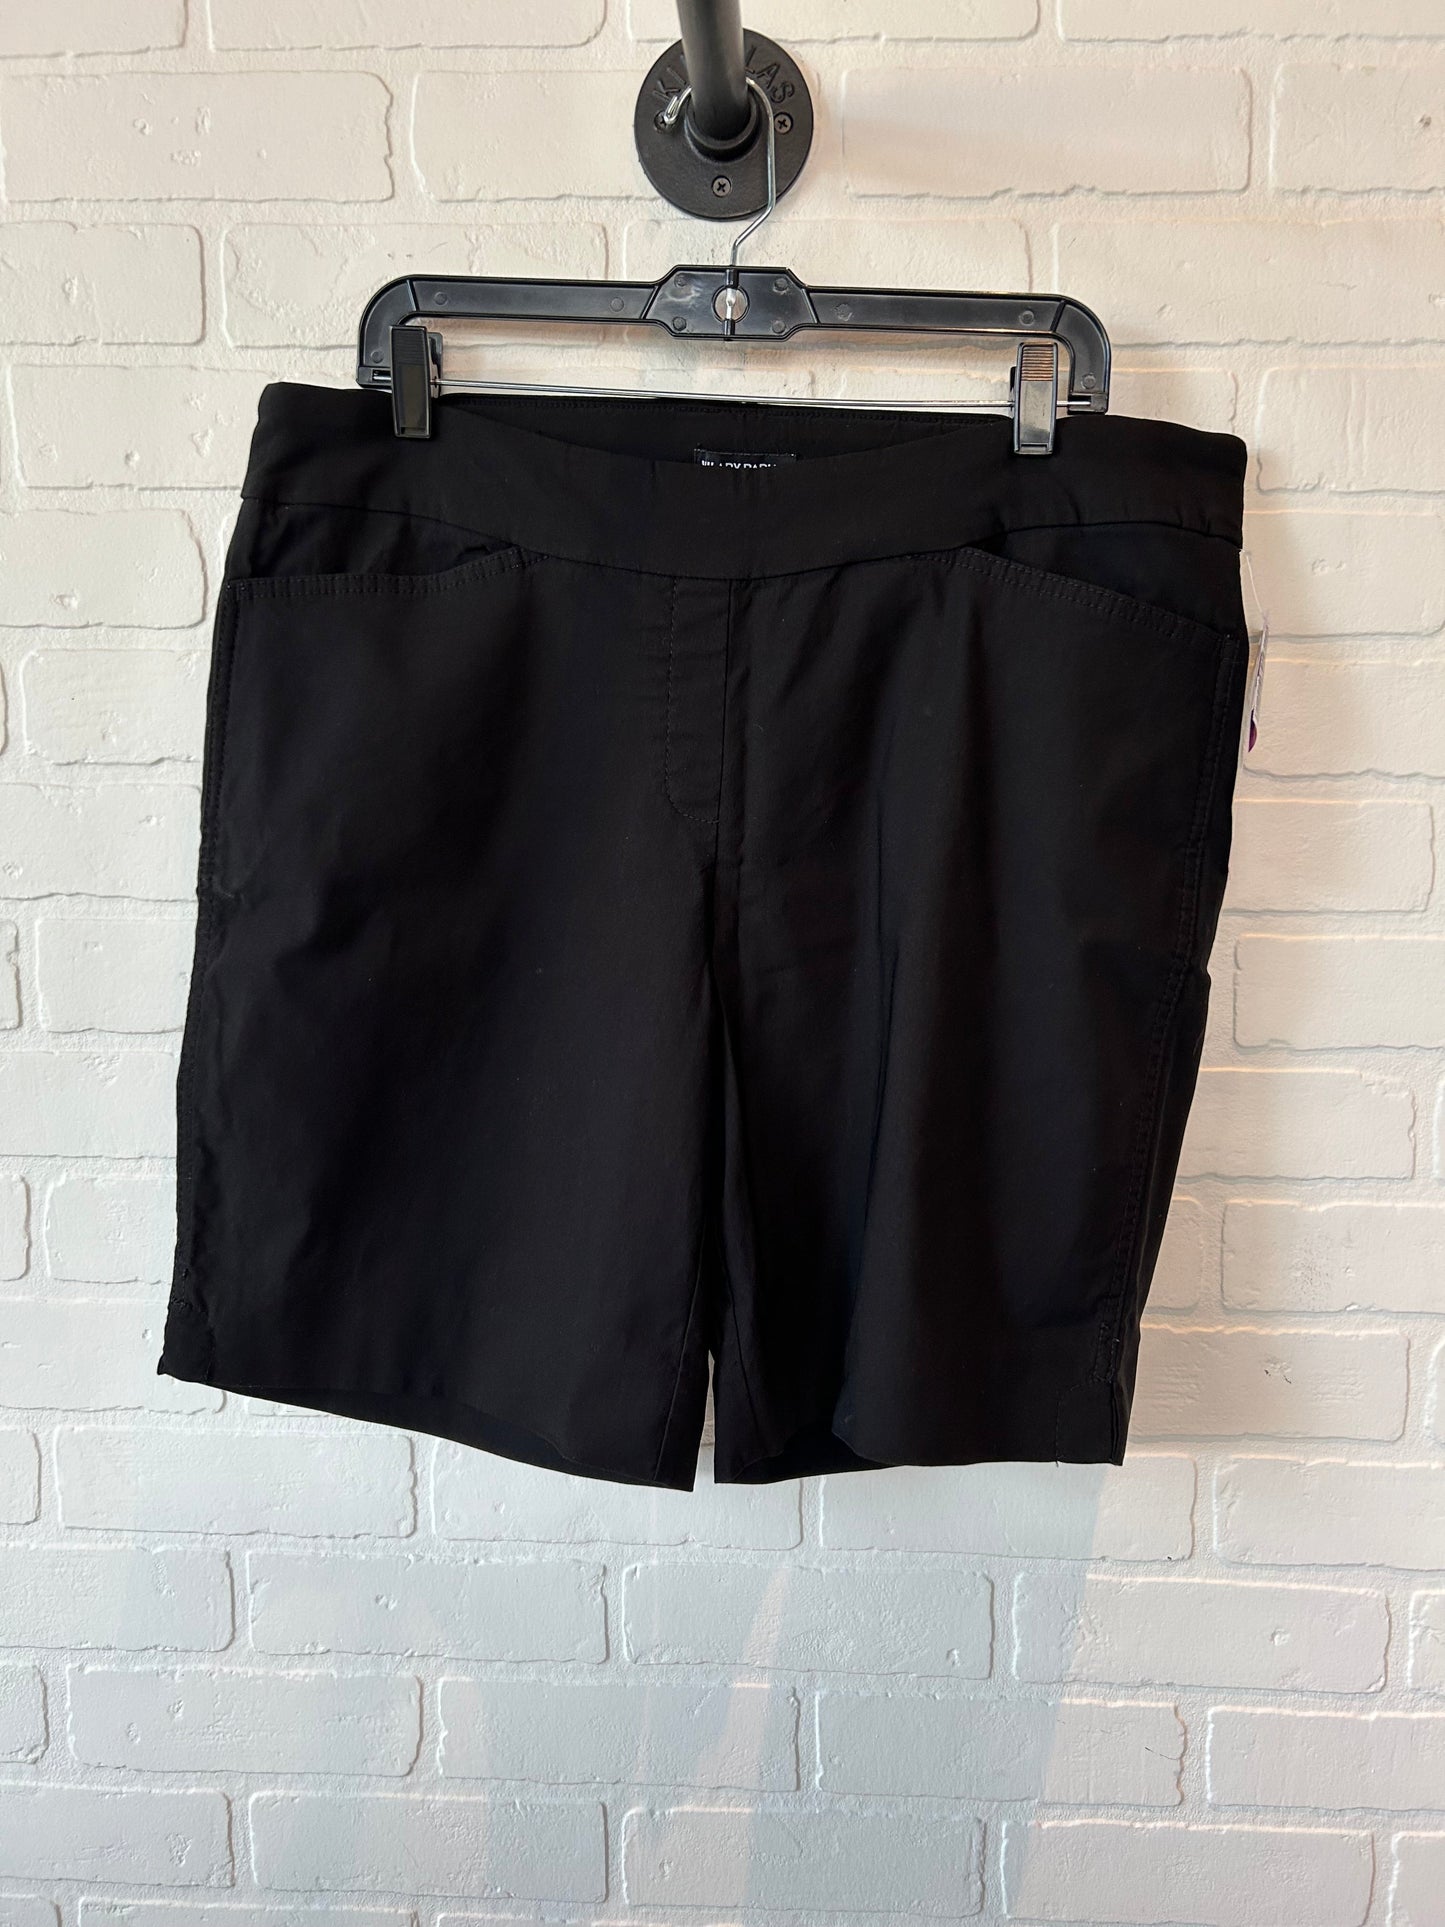 Black Shorts Hilary Radley, Size 16